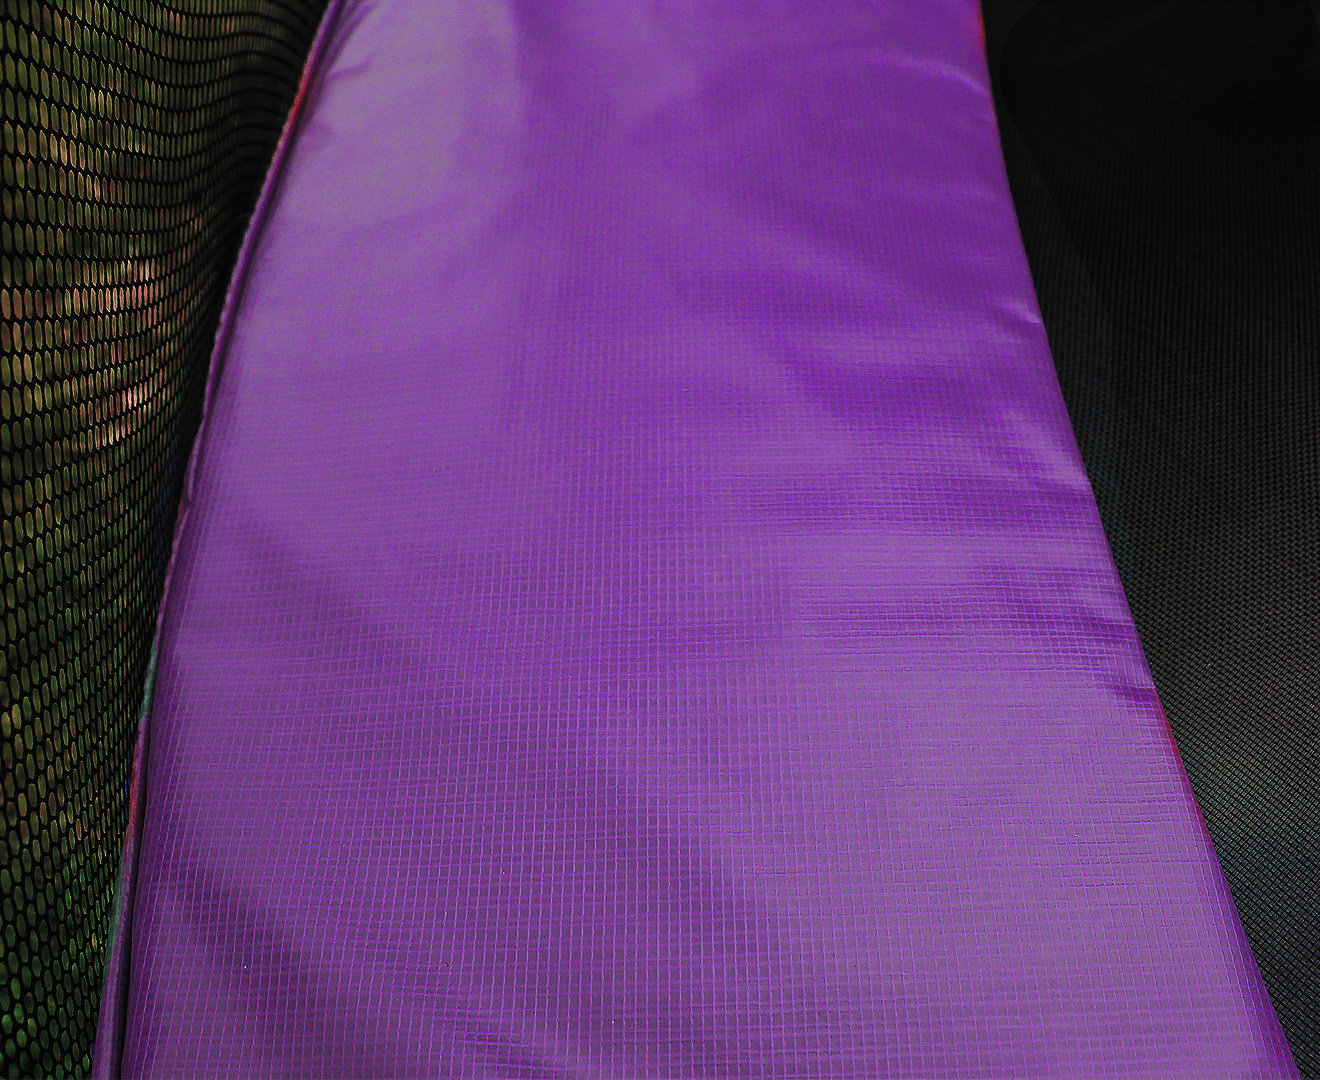 Kahuna 8ft Trampoline Replacement Pad Round - Purple - SILBERSHELL